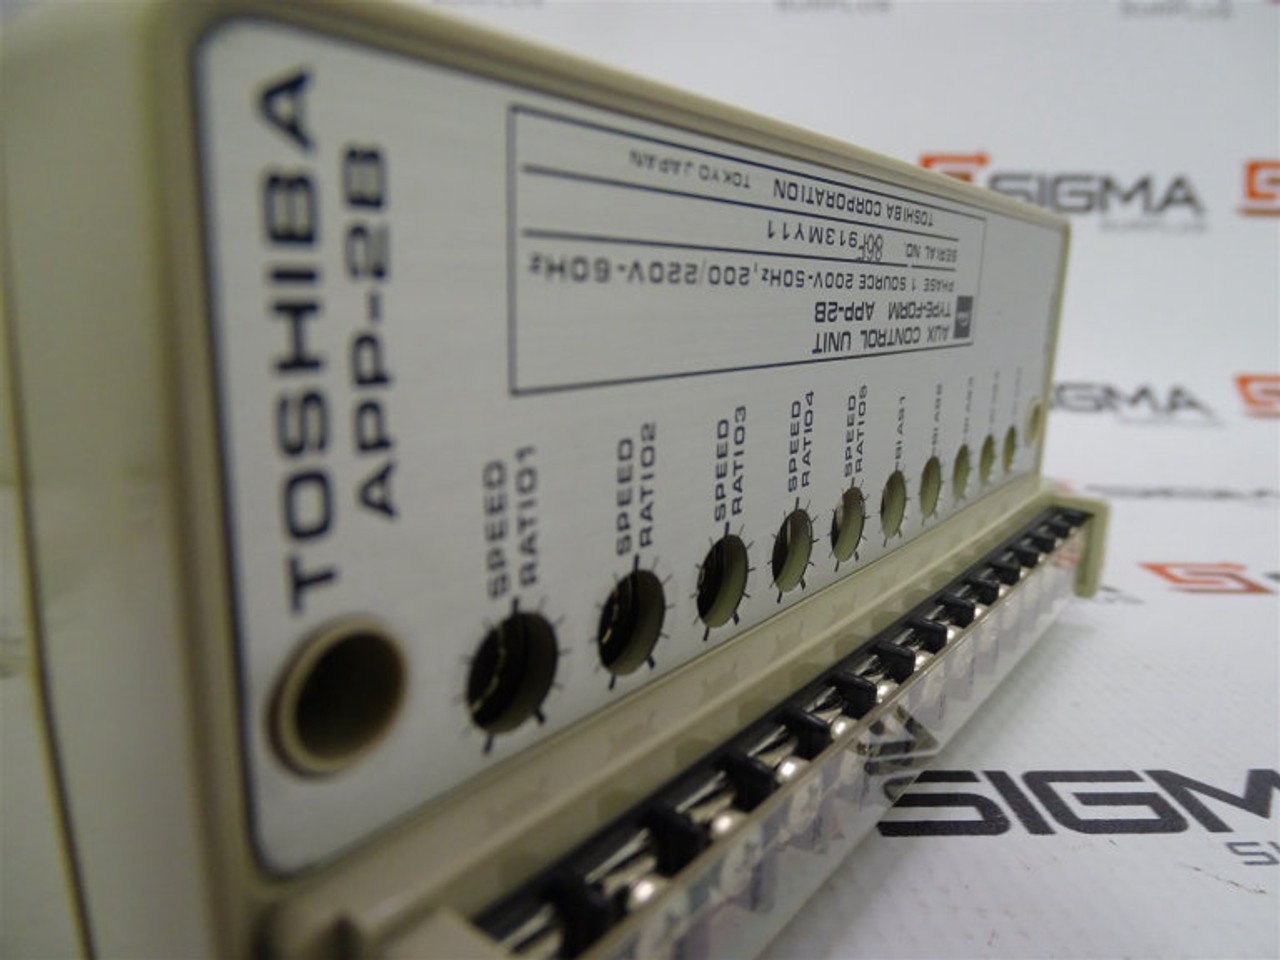 Toshiba APP-2B Control Panel